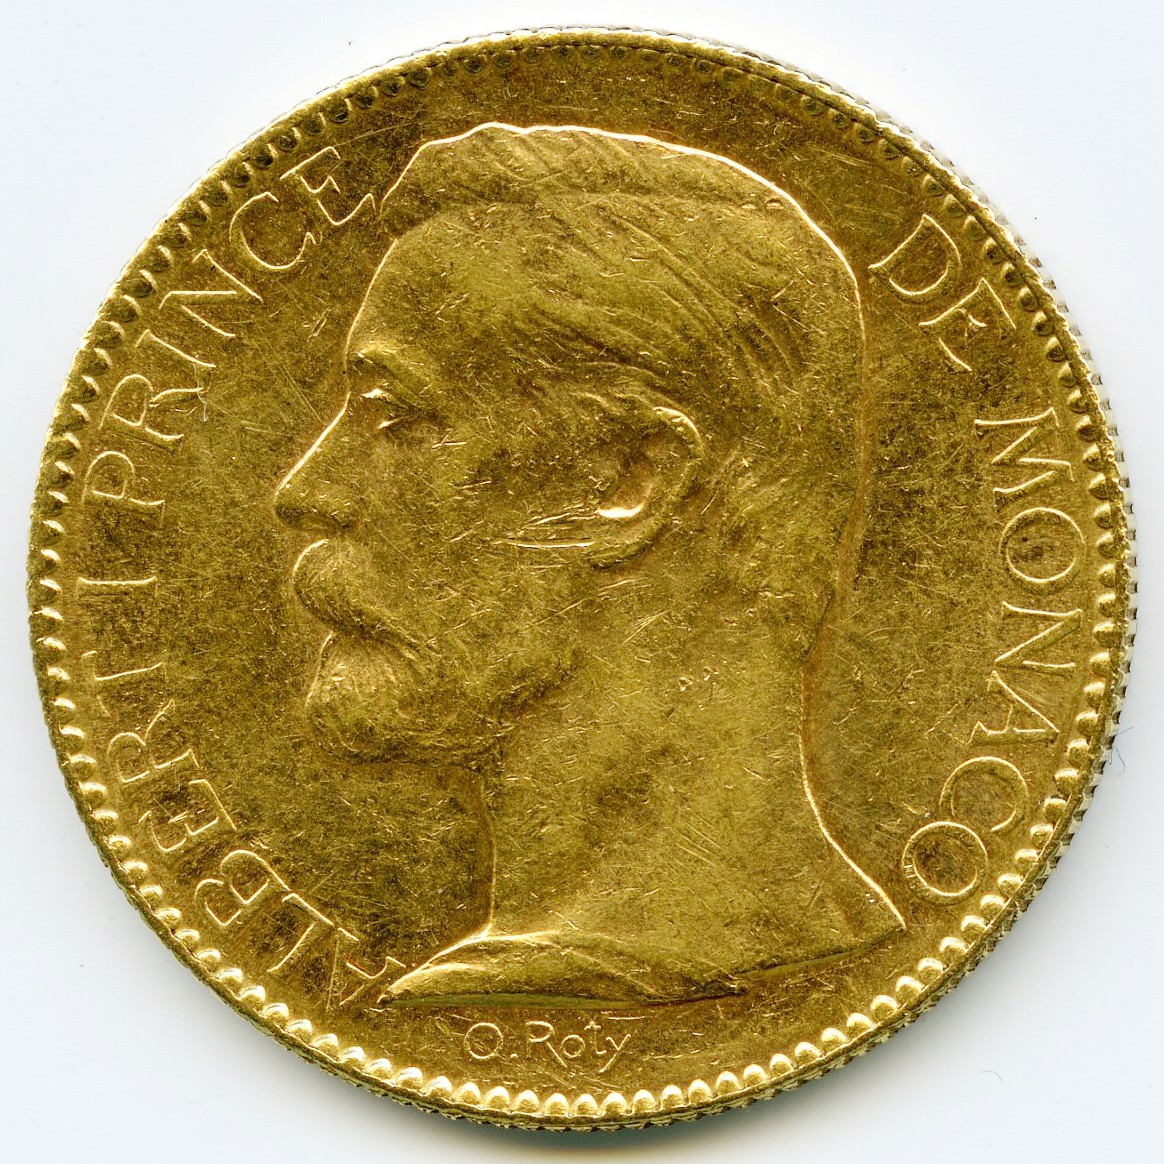 Monaco - 100 Francs - 1904 A avers